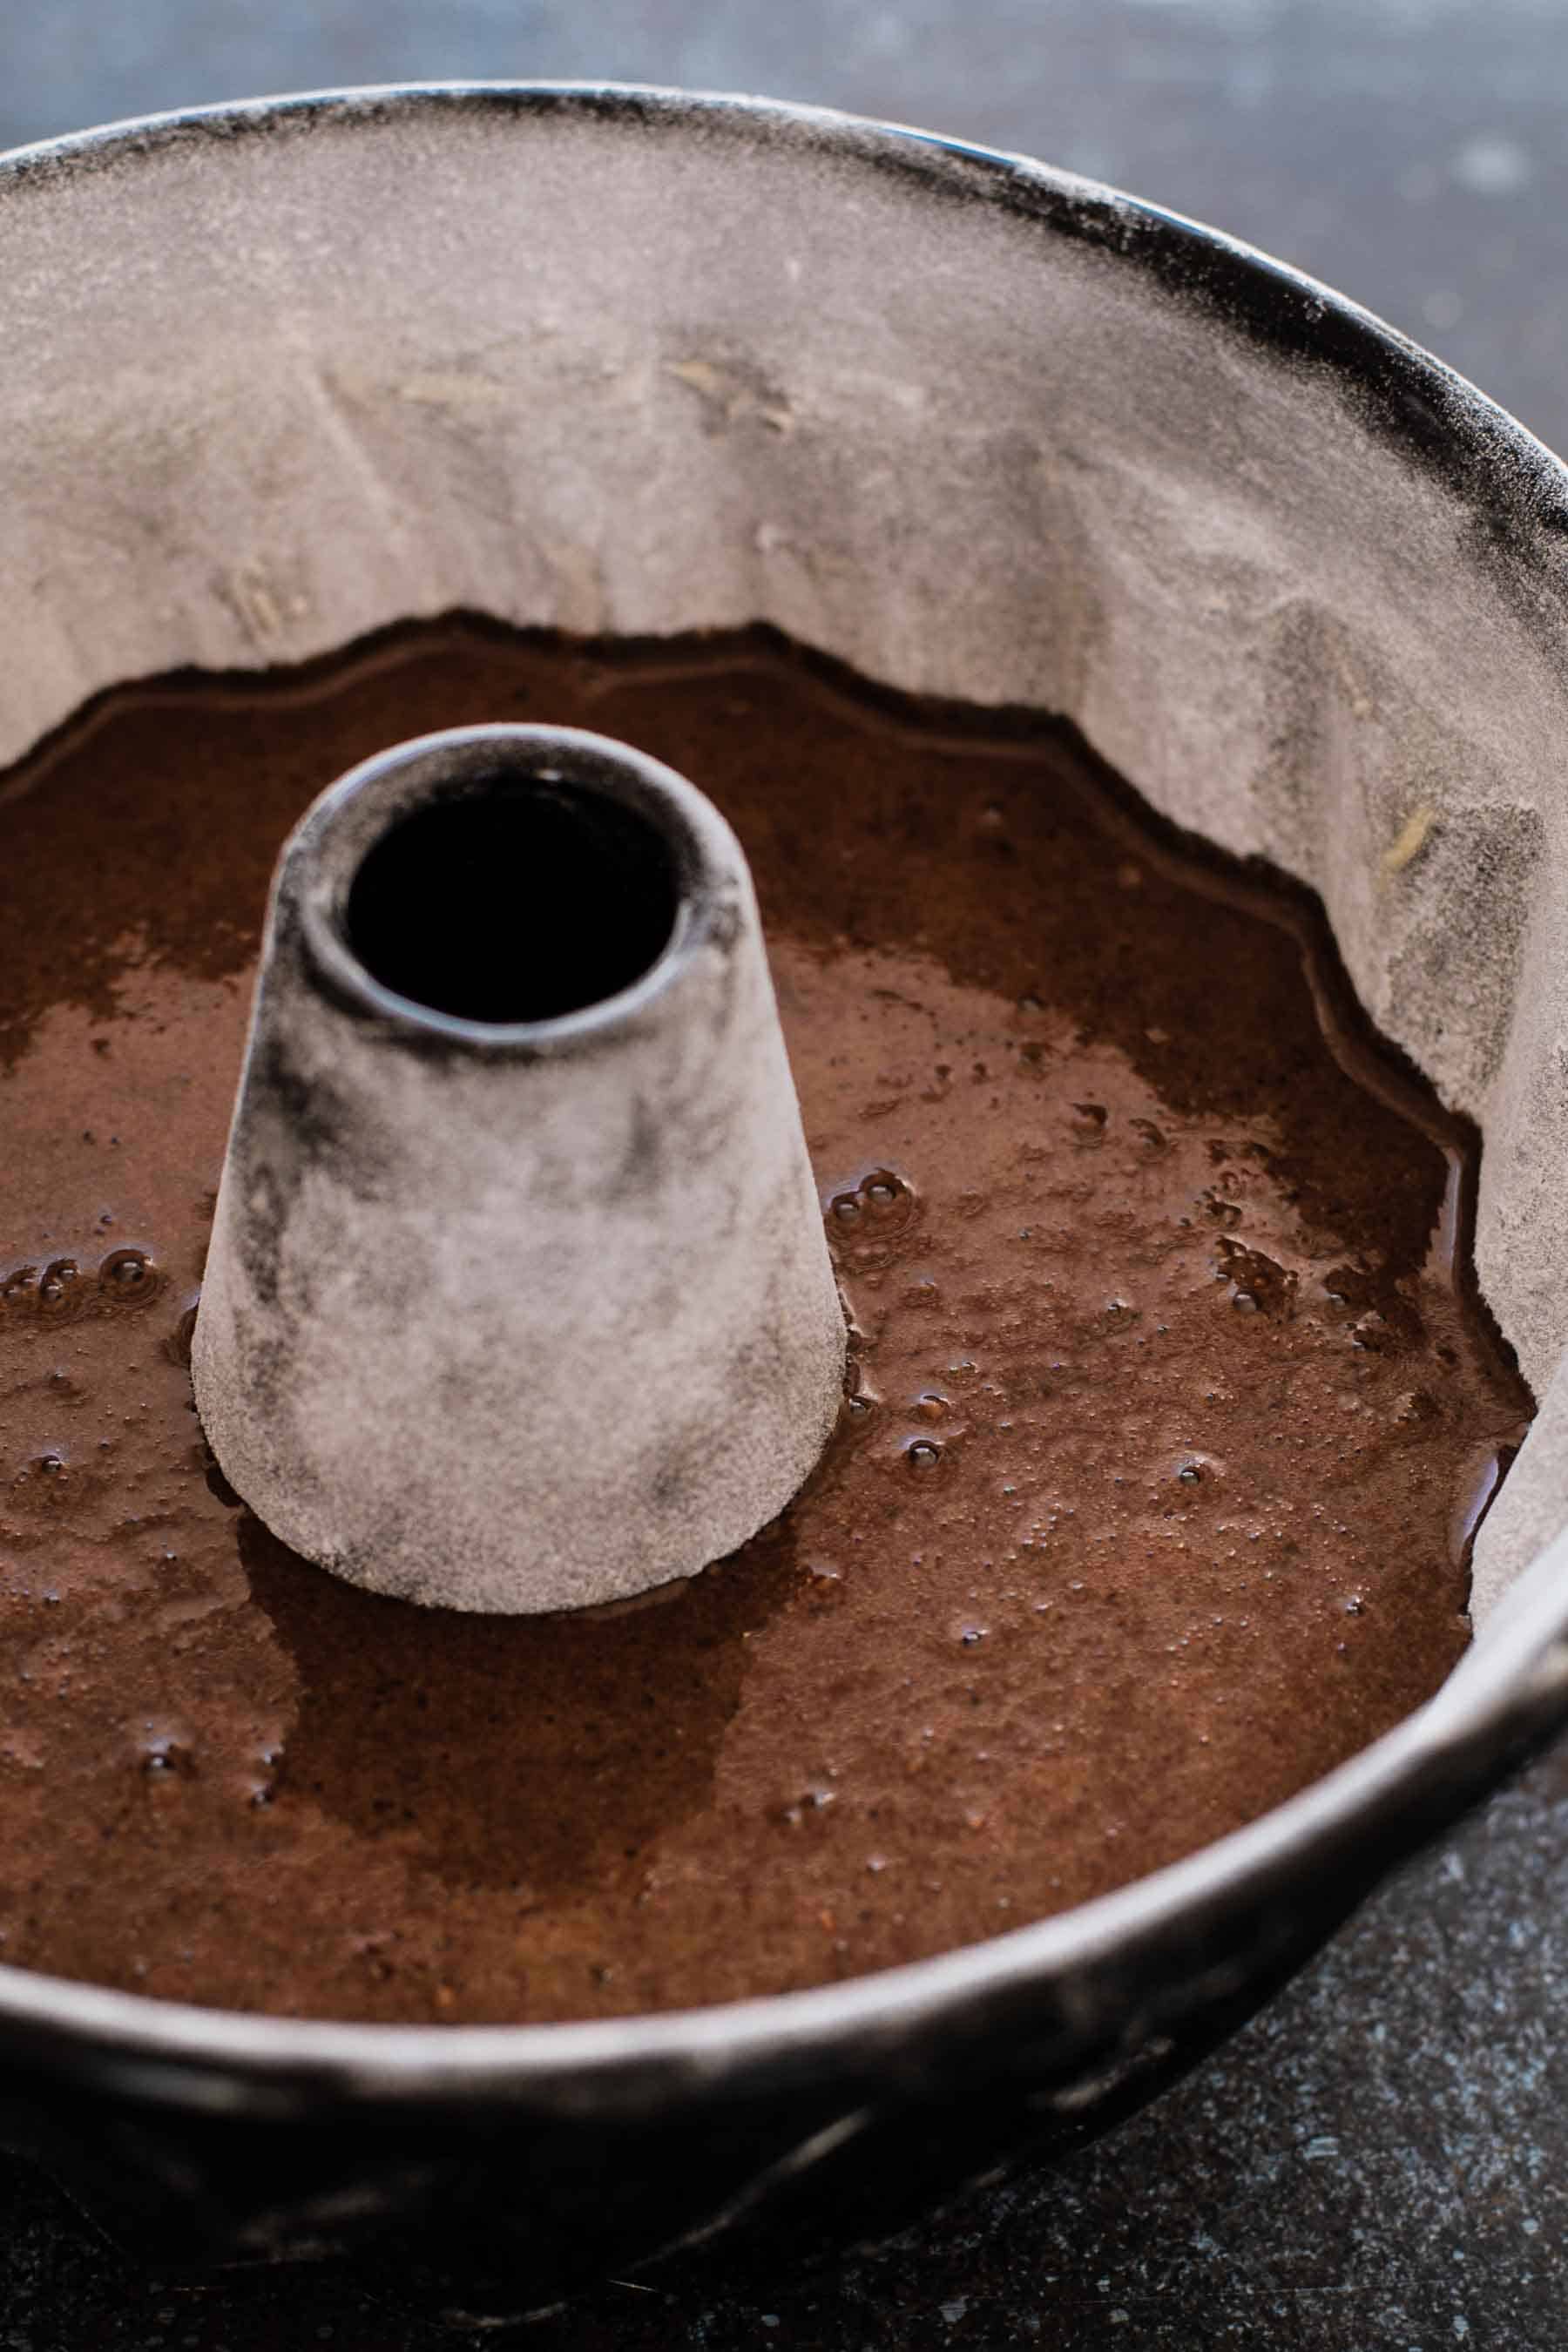 bundt pan half-filled with chocolate batter